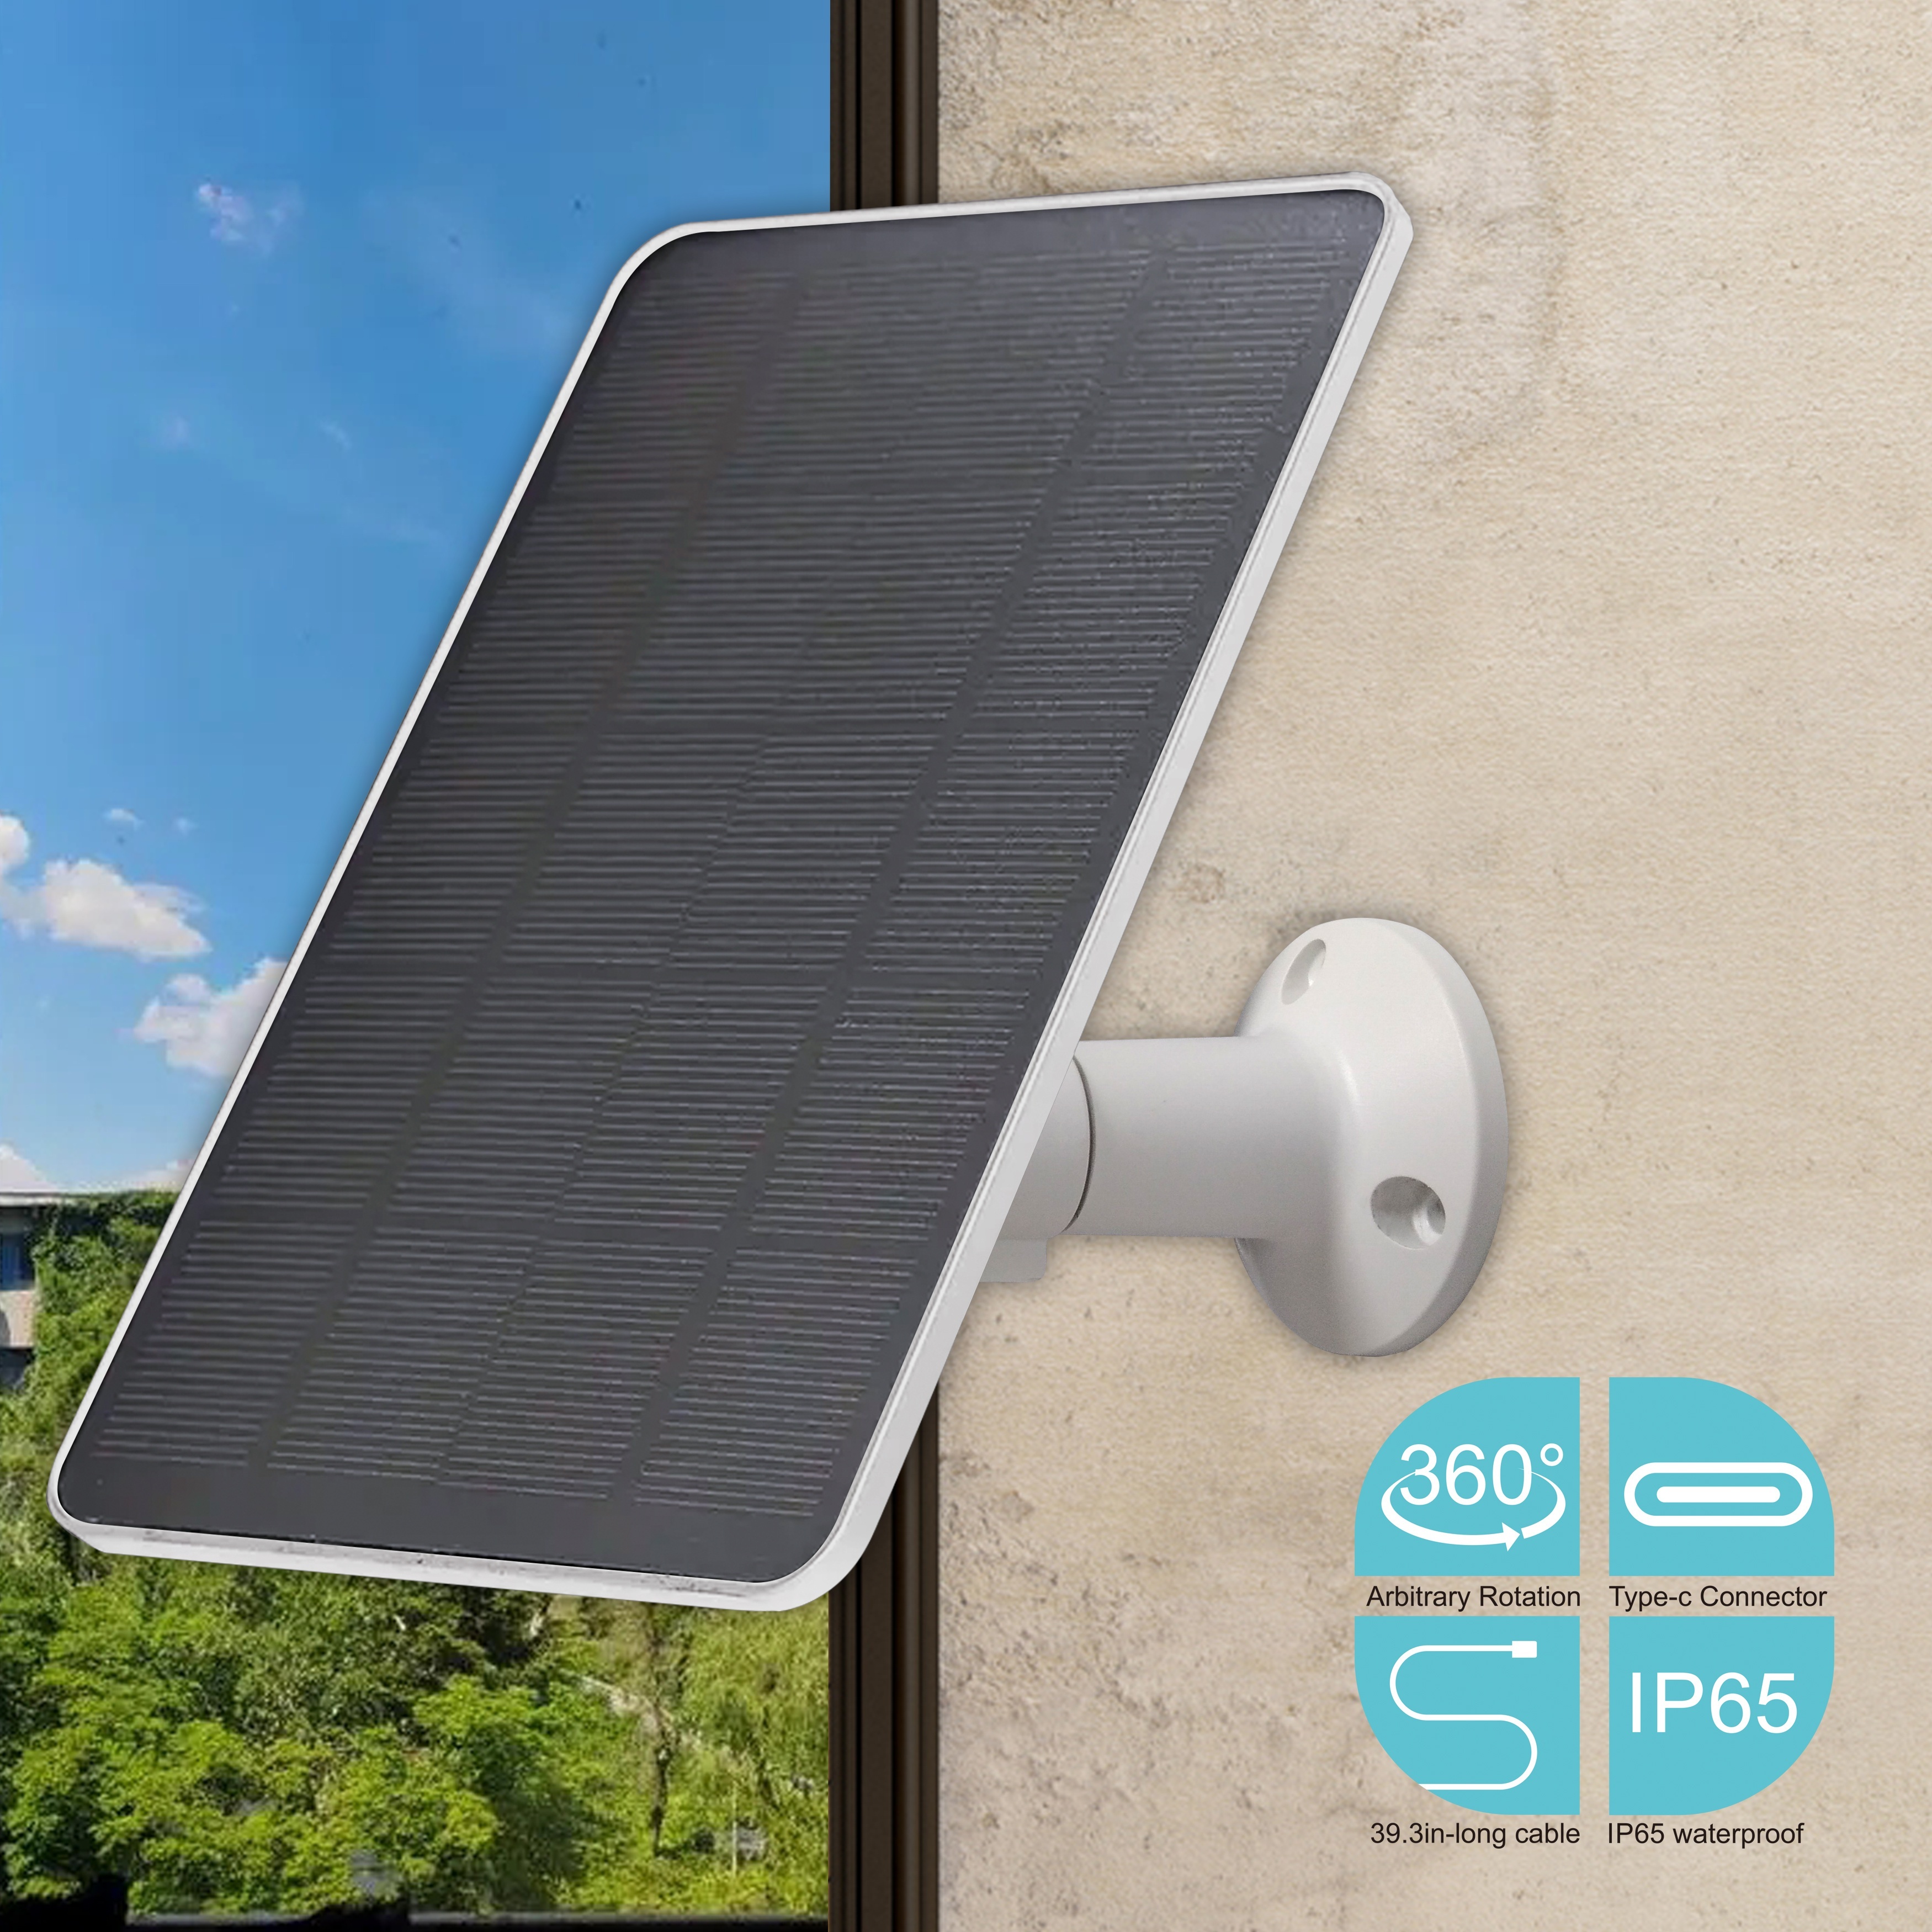 Panel Solar para Camara de Seguridad Cargador Solar Portatil con